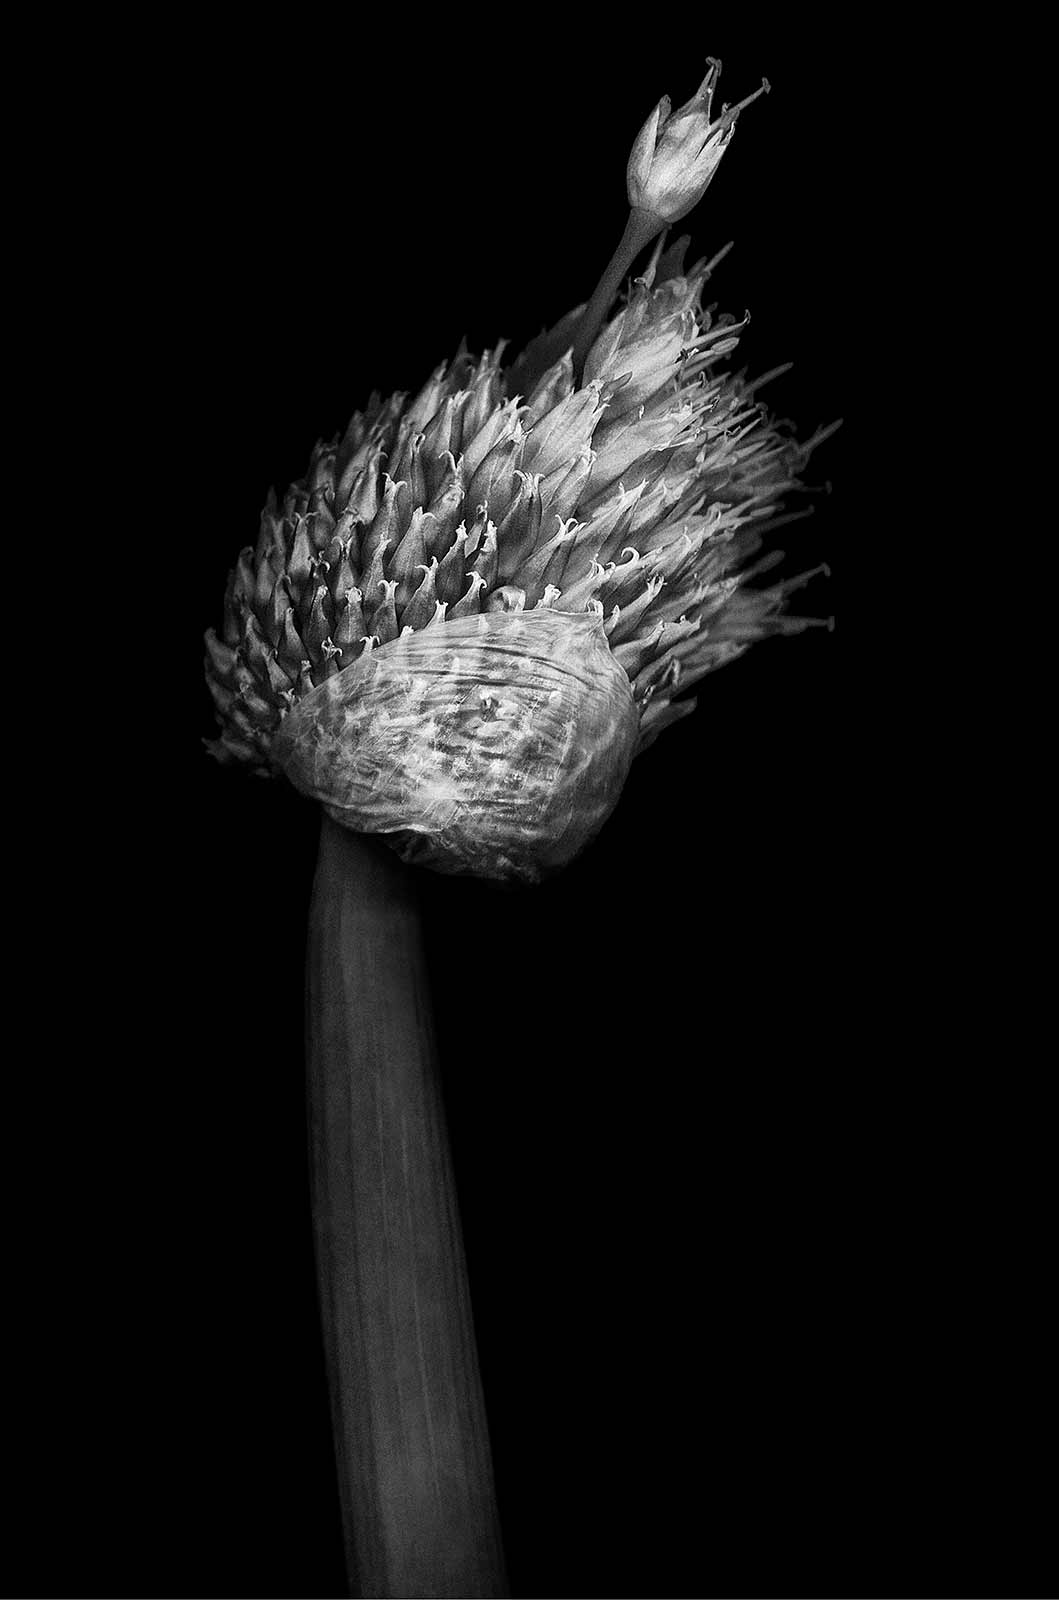 Black and white photographer scanography onions flower seed head karen visser photographer